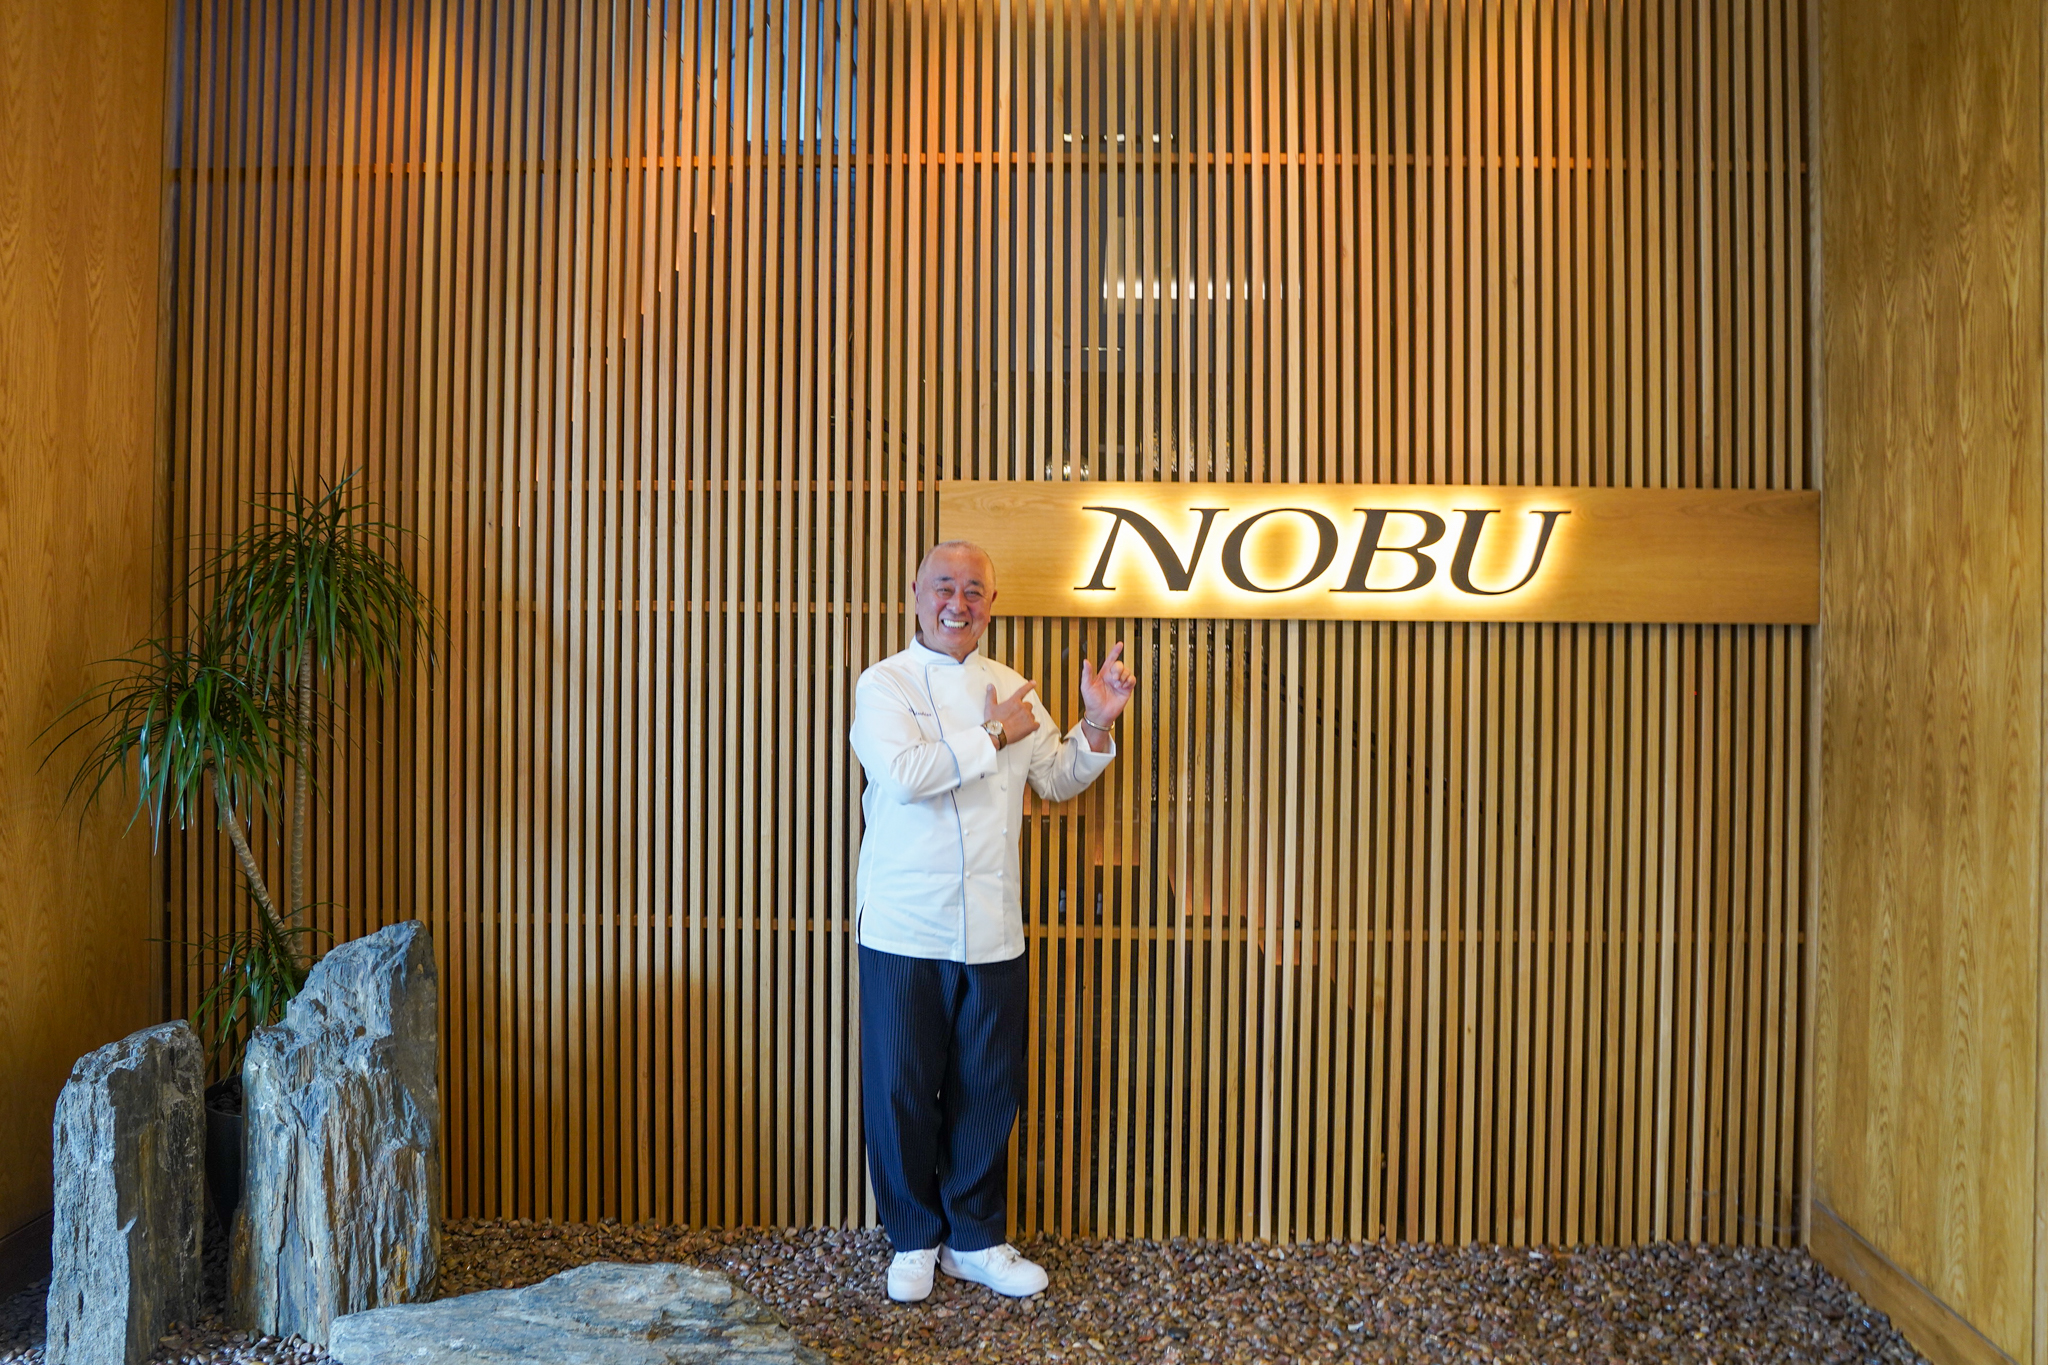 Chef Nobu Matsuhisa points to illuminated Nobu sign at the Galleria Houston location.